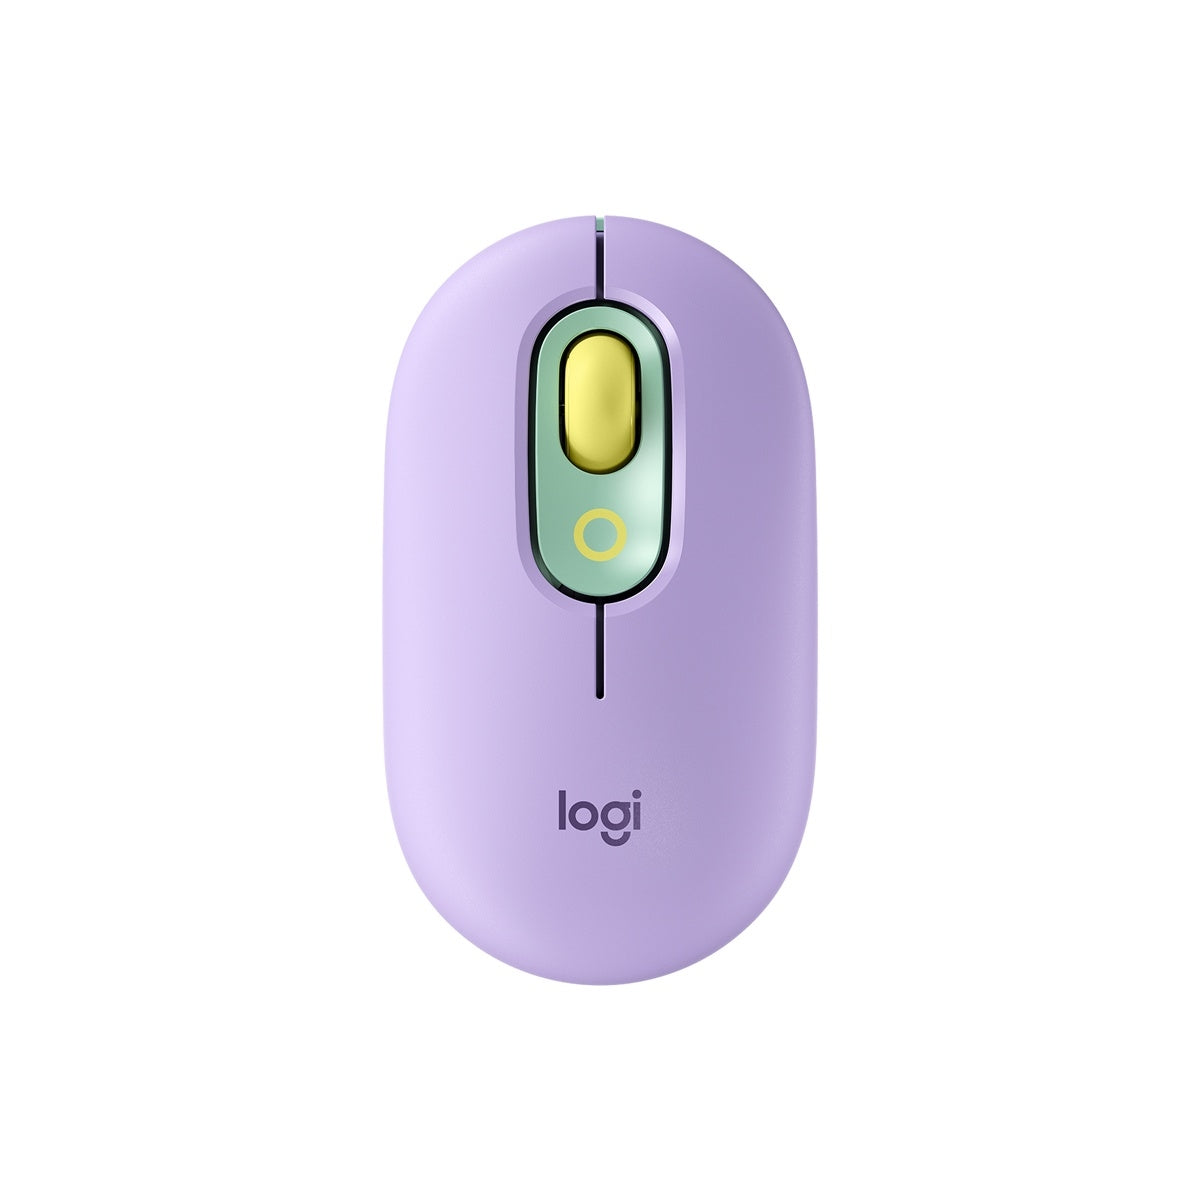 Logitech POP Mouse w/emoji-Daydream Mint -Optical-Bluetooth